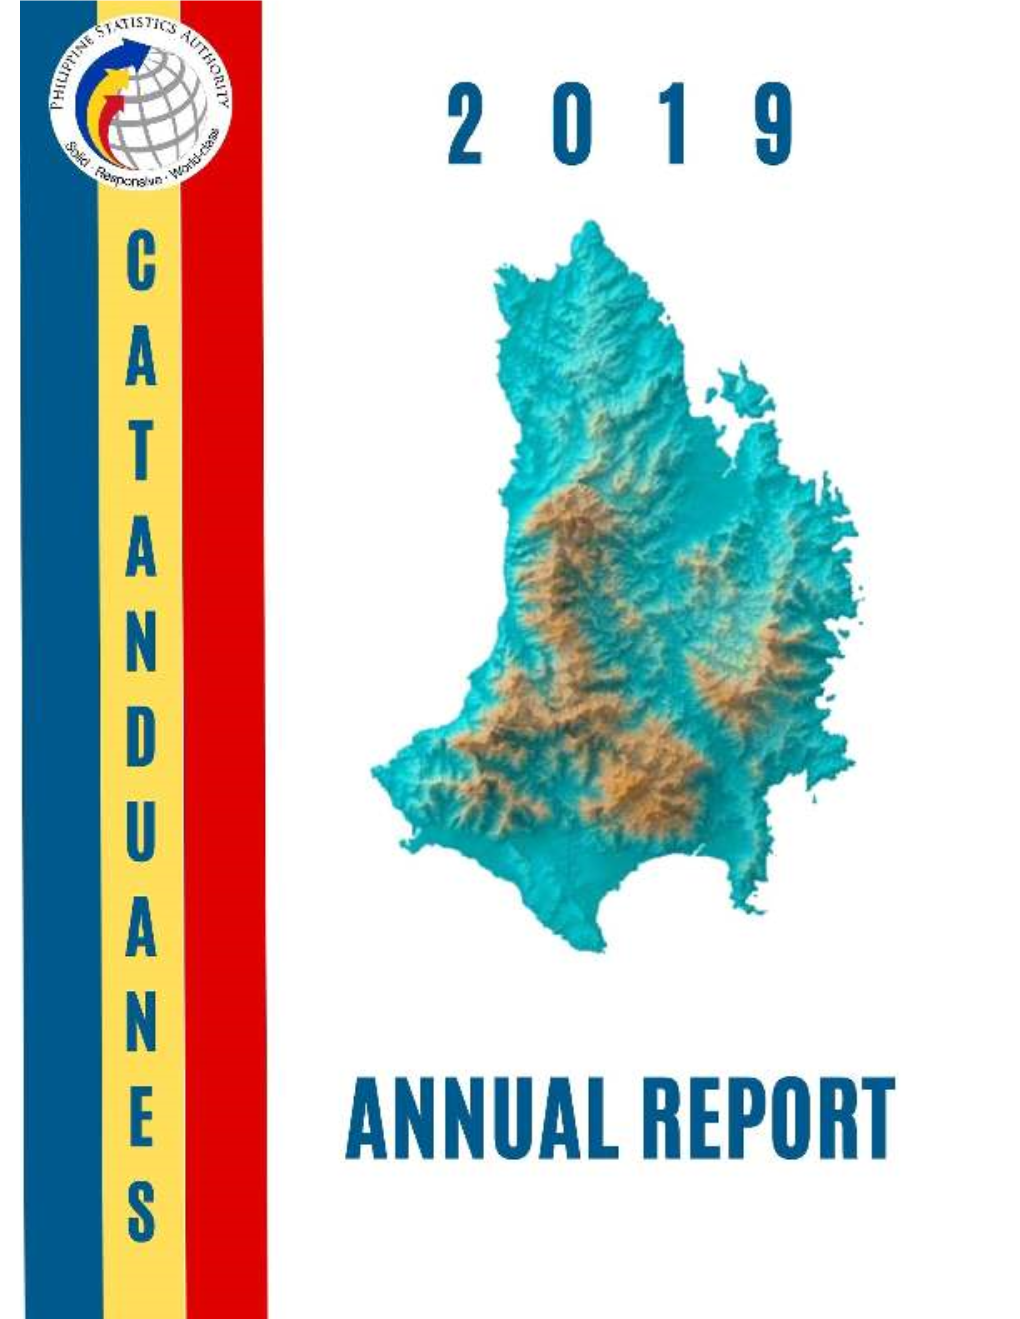 Catanduanes Annual Report 2019